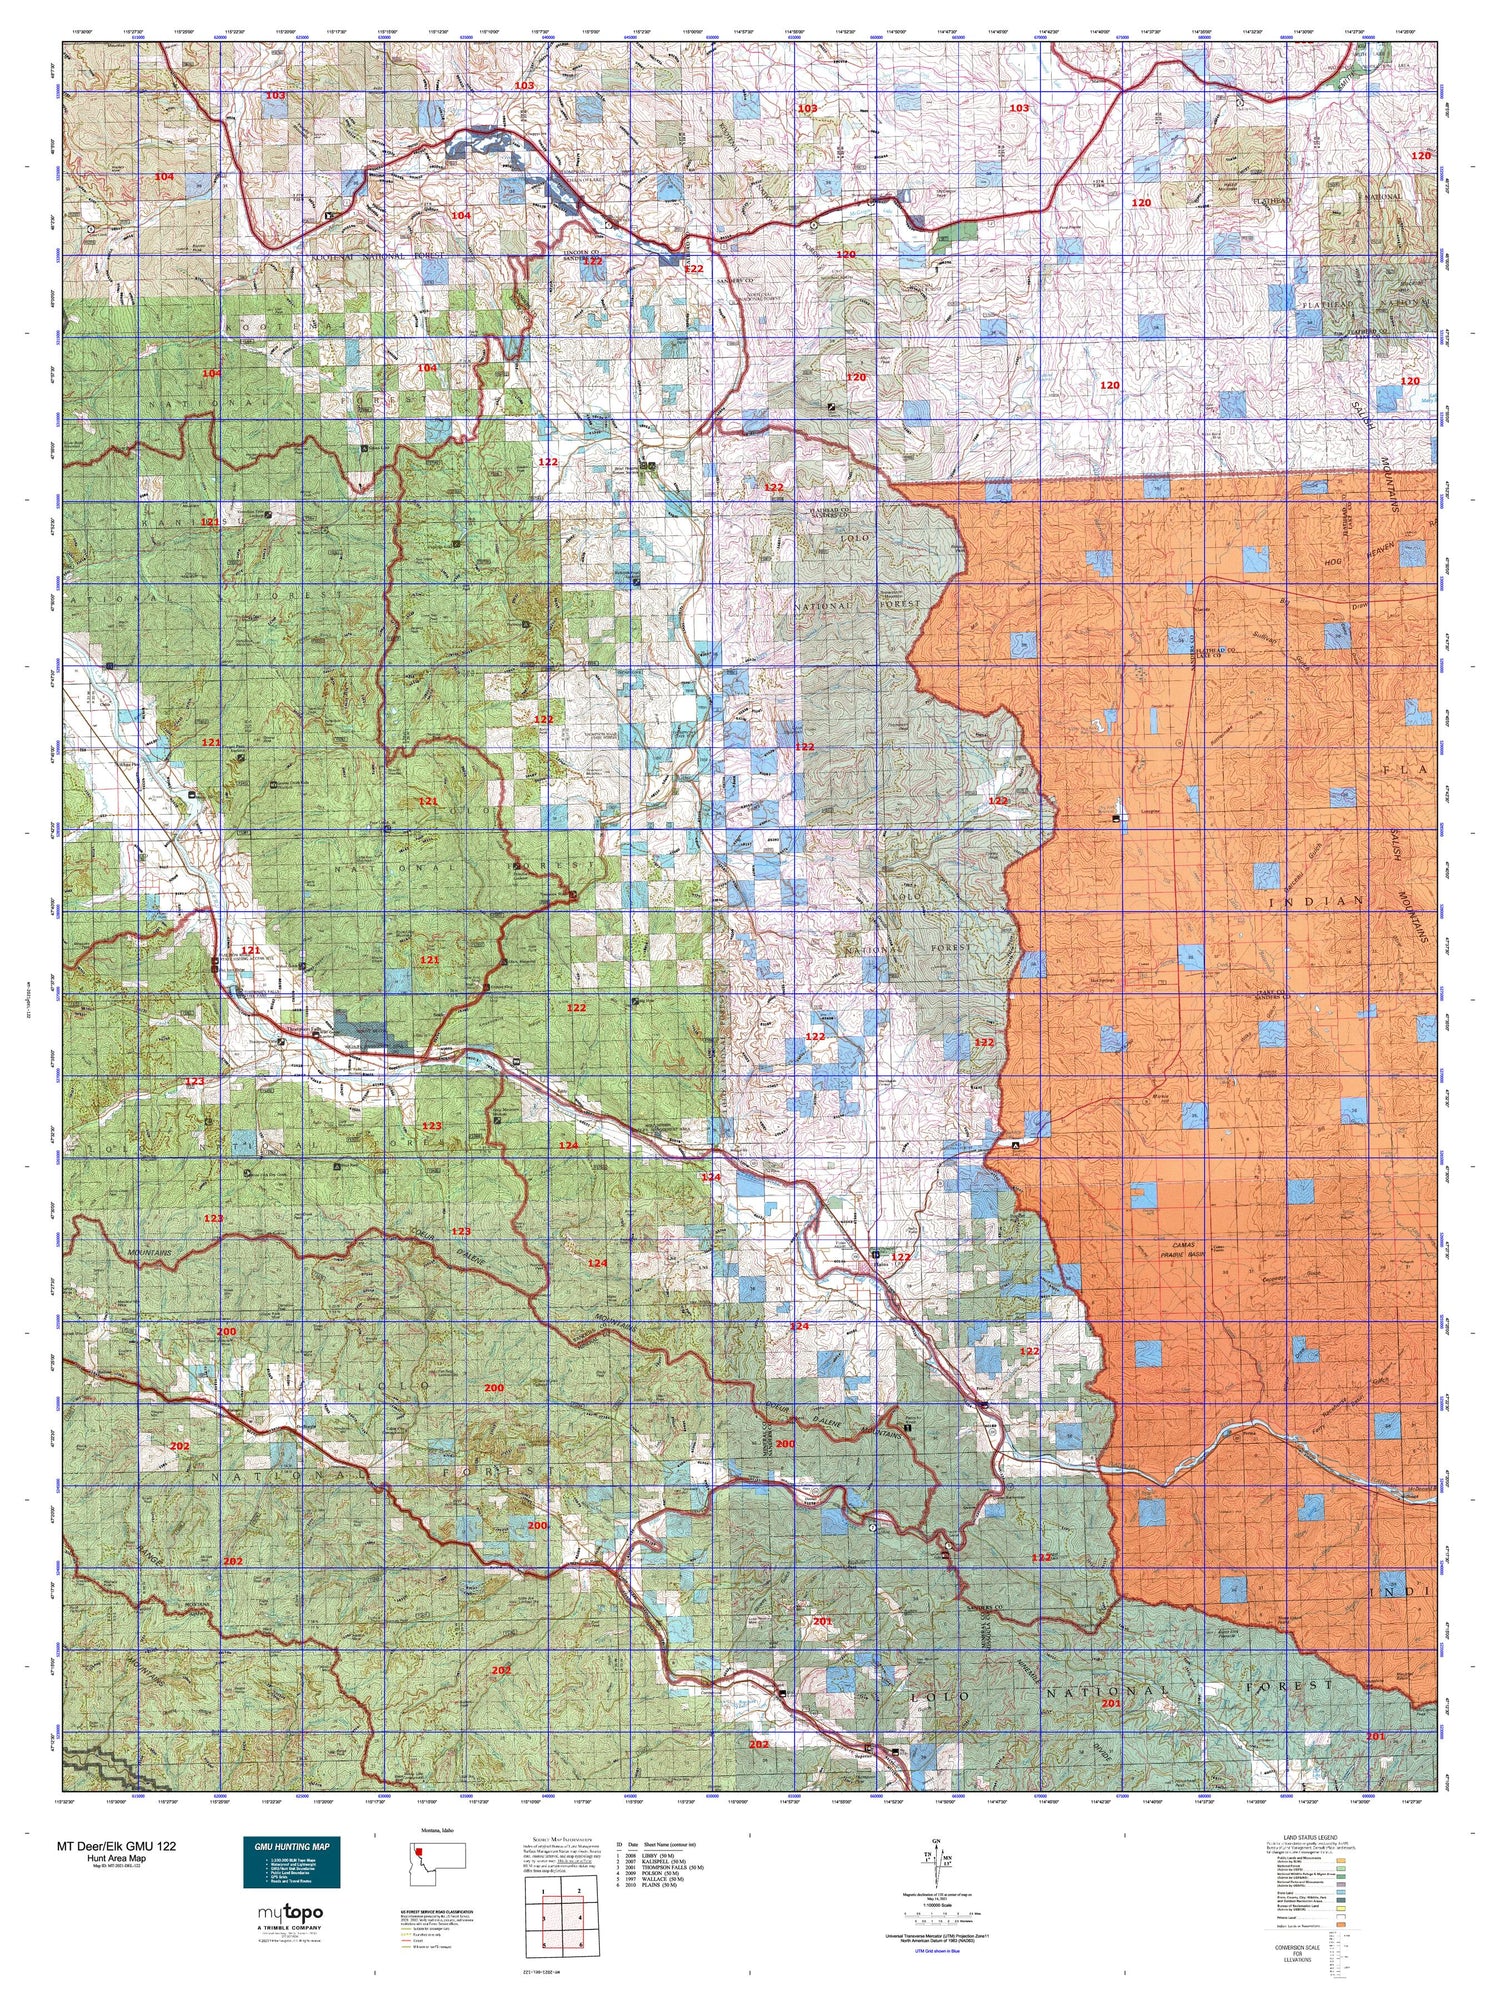 Montana Deer/Elk GMU 122 Map Image